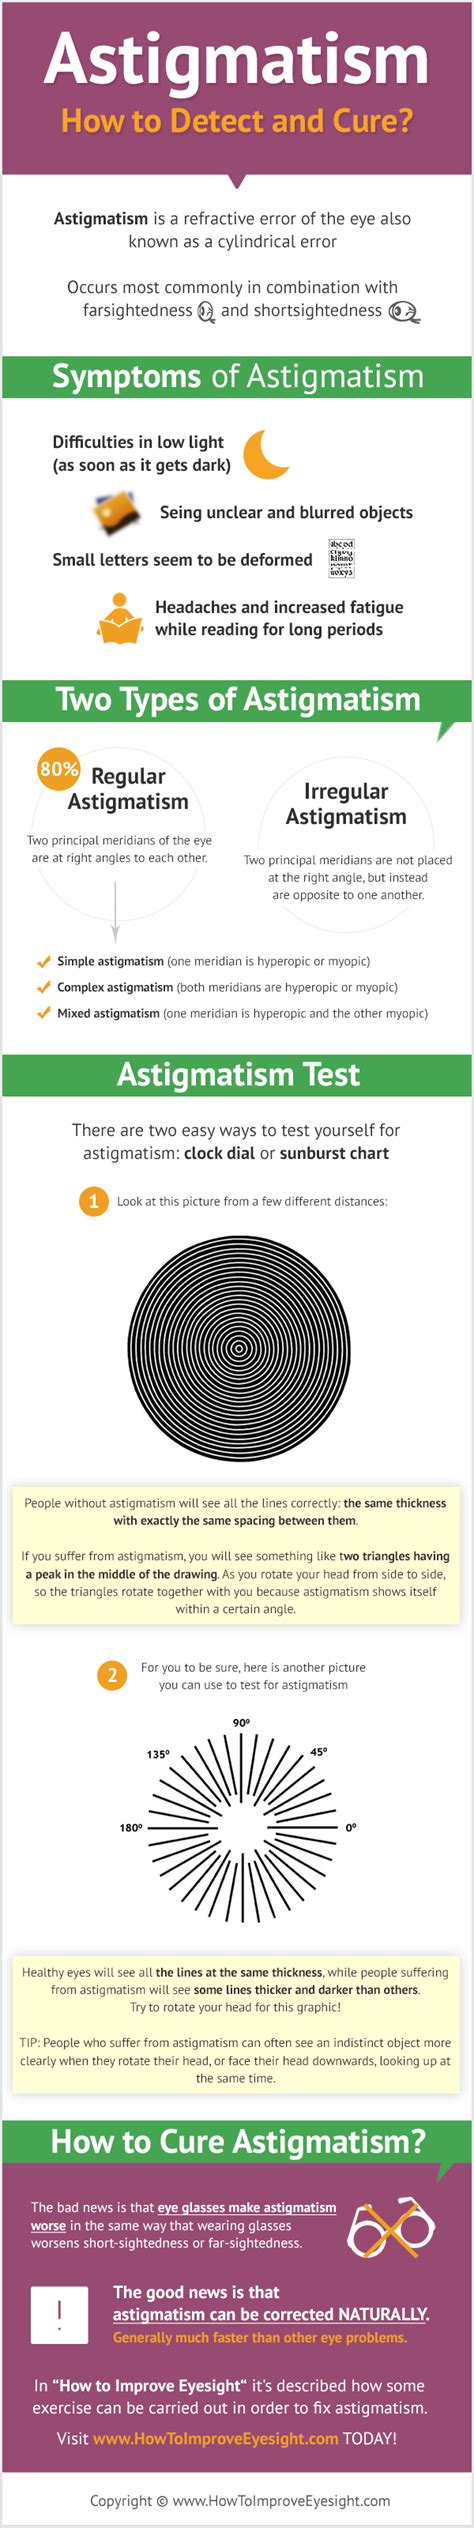 Eye Exercises For Astigmatism